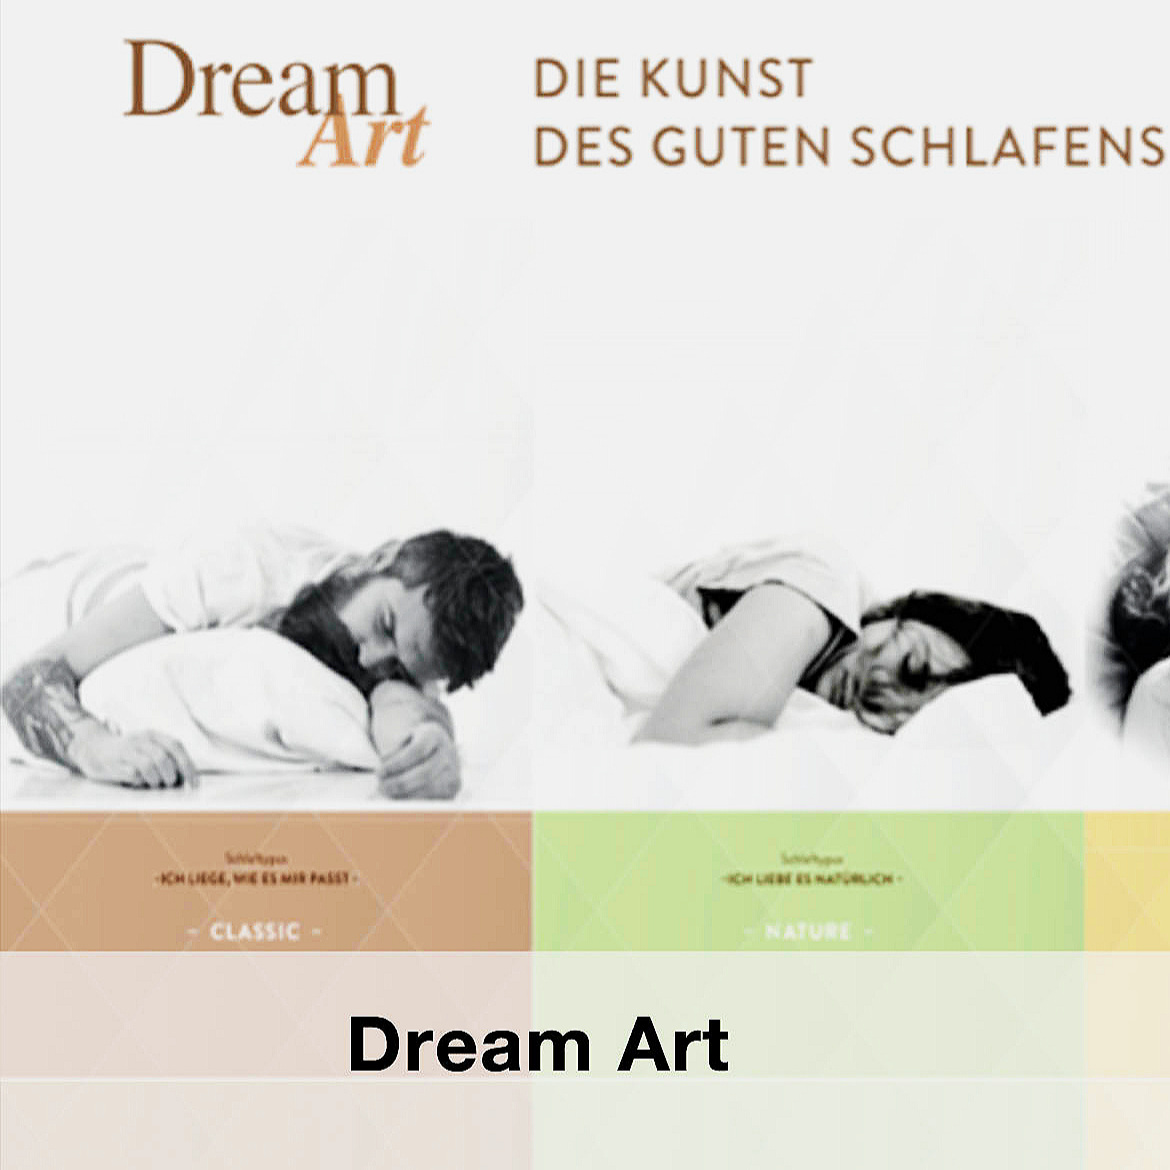 Dream Art Relaunch by thinknewgroup